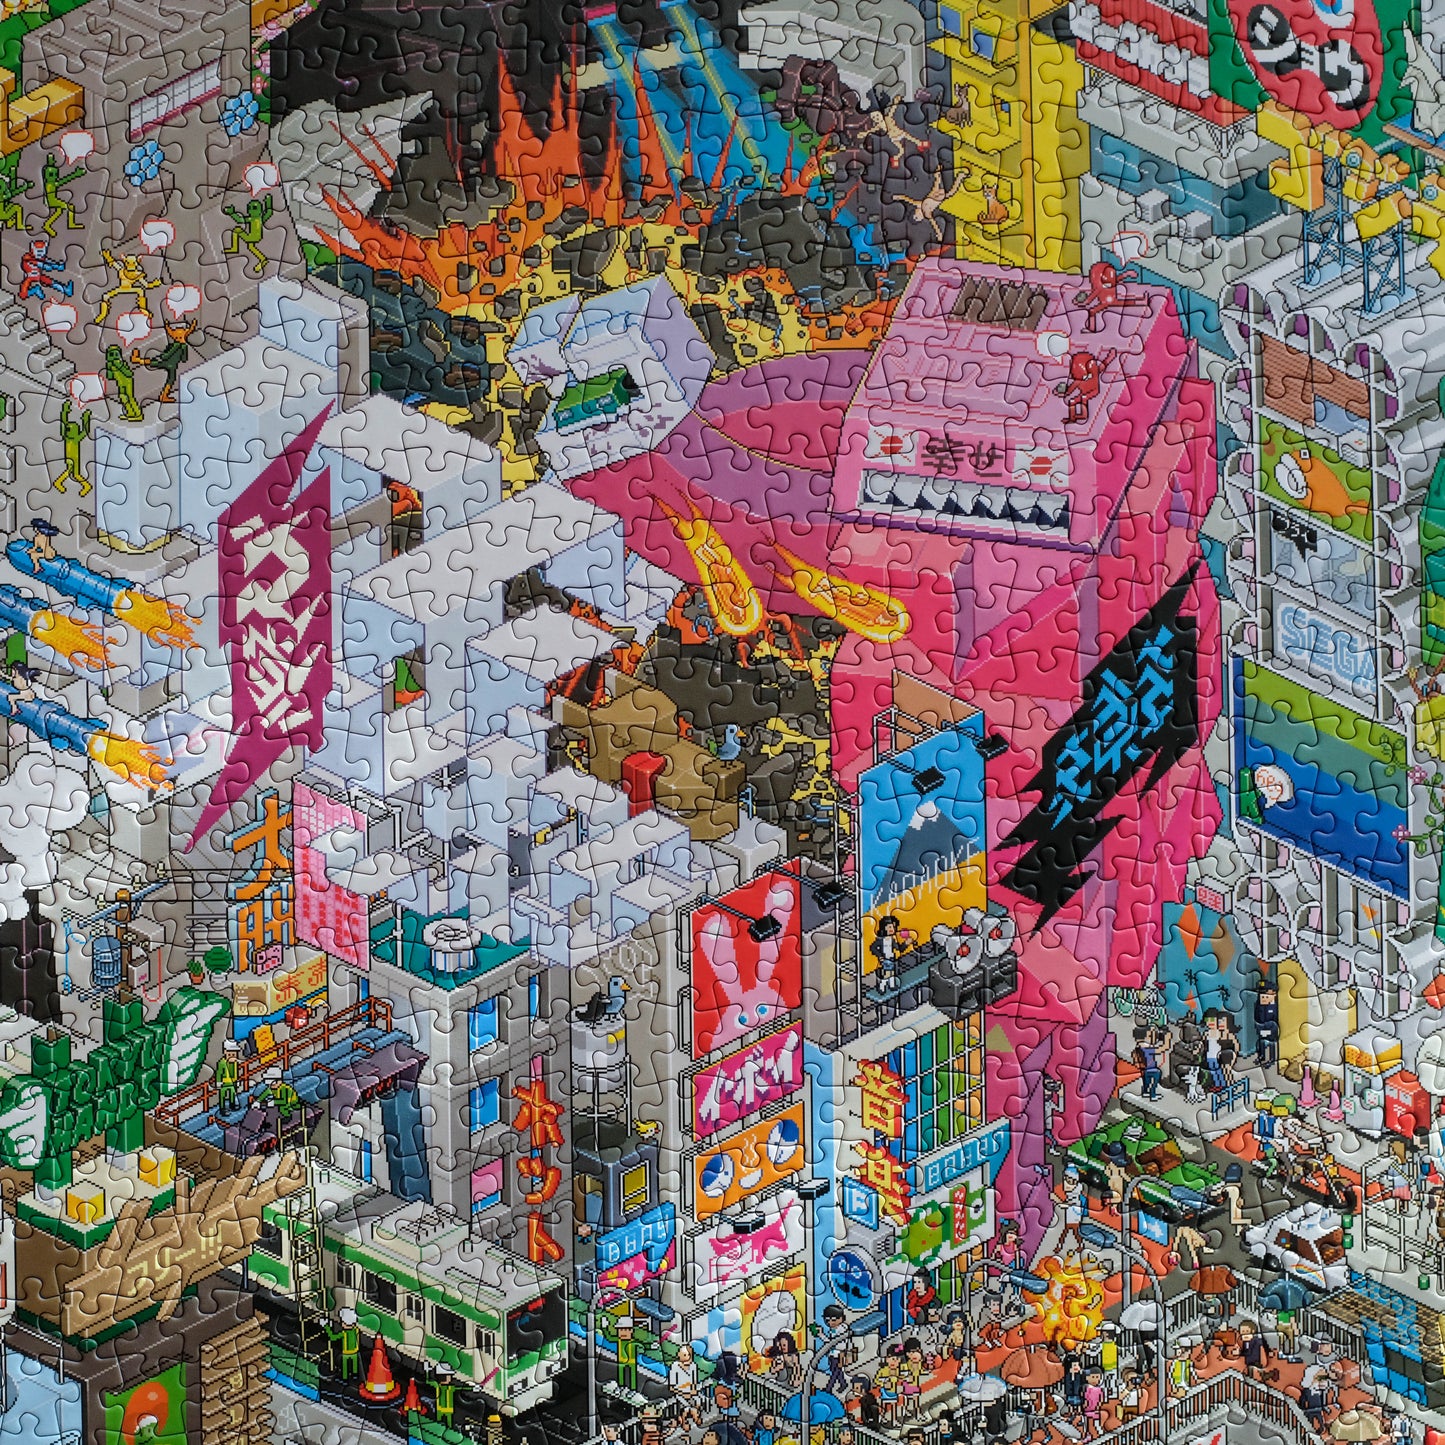 eBoy Pixel Art Puzzle of Tokyo